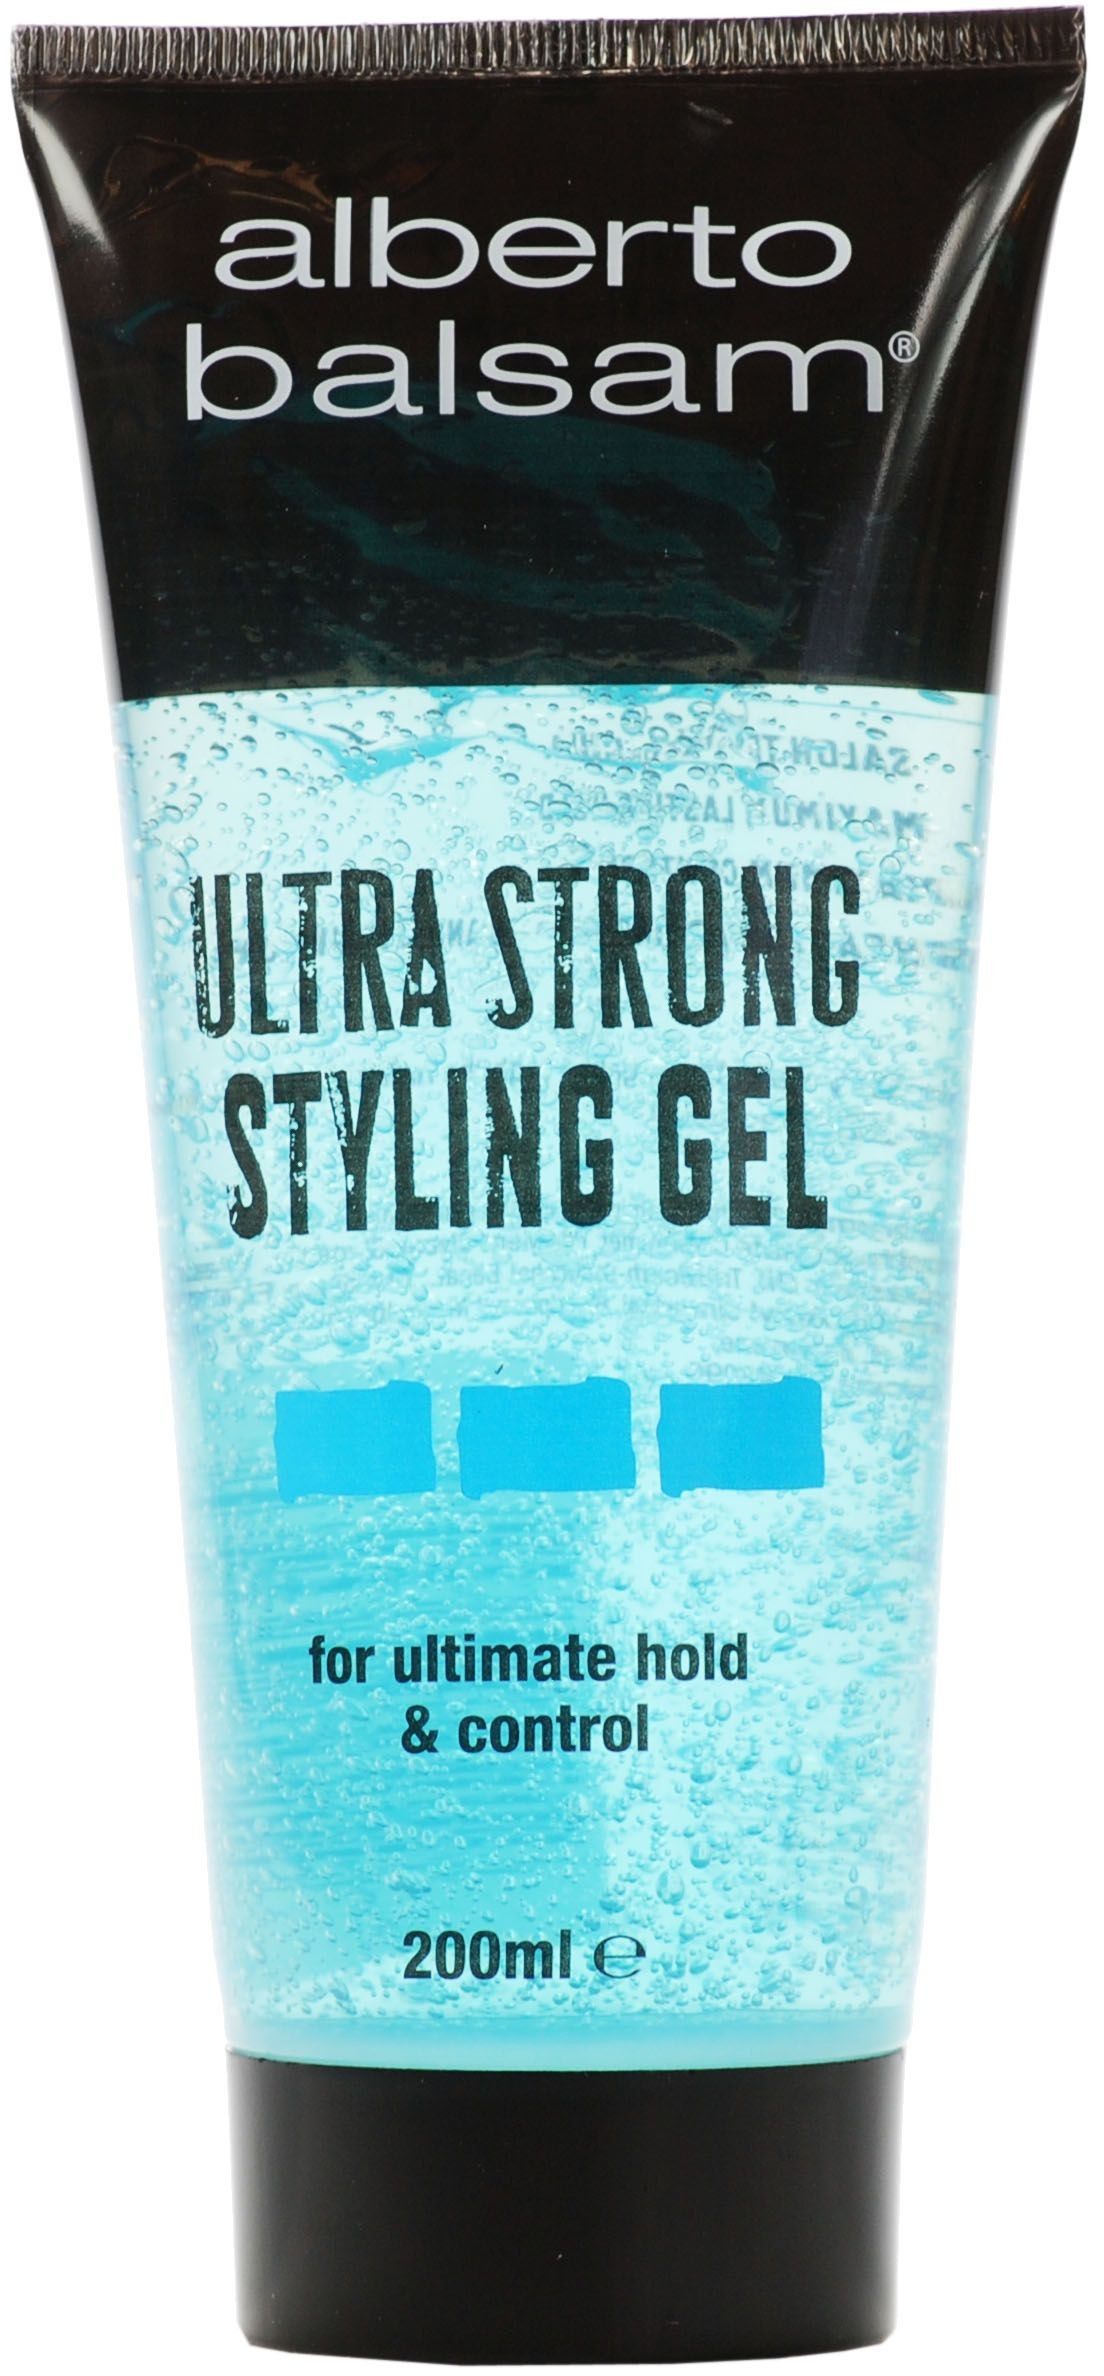 alberto balsam ultra strong styling gel